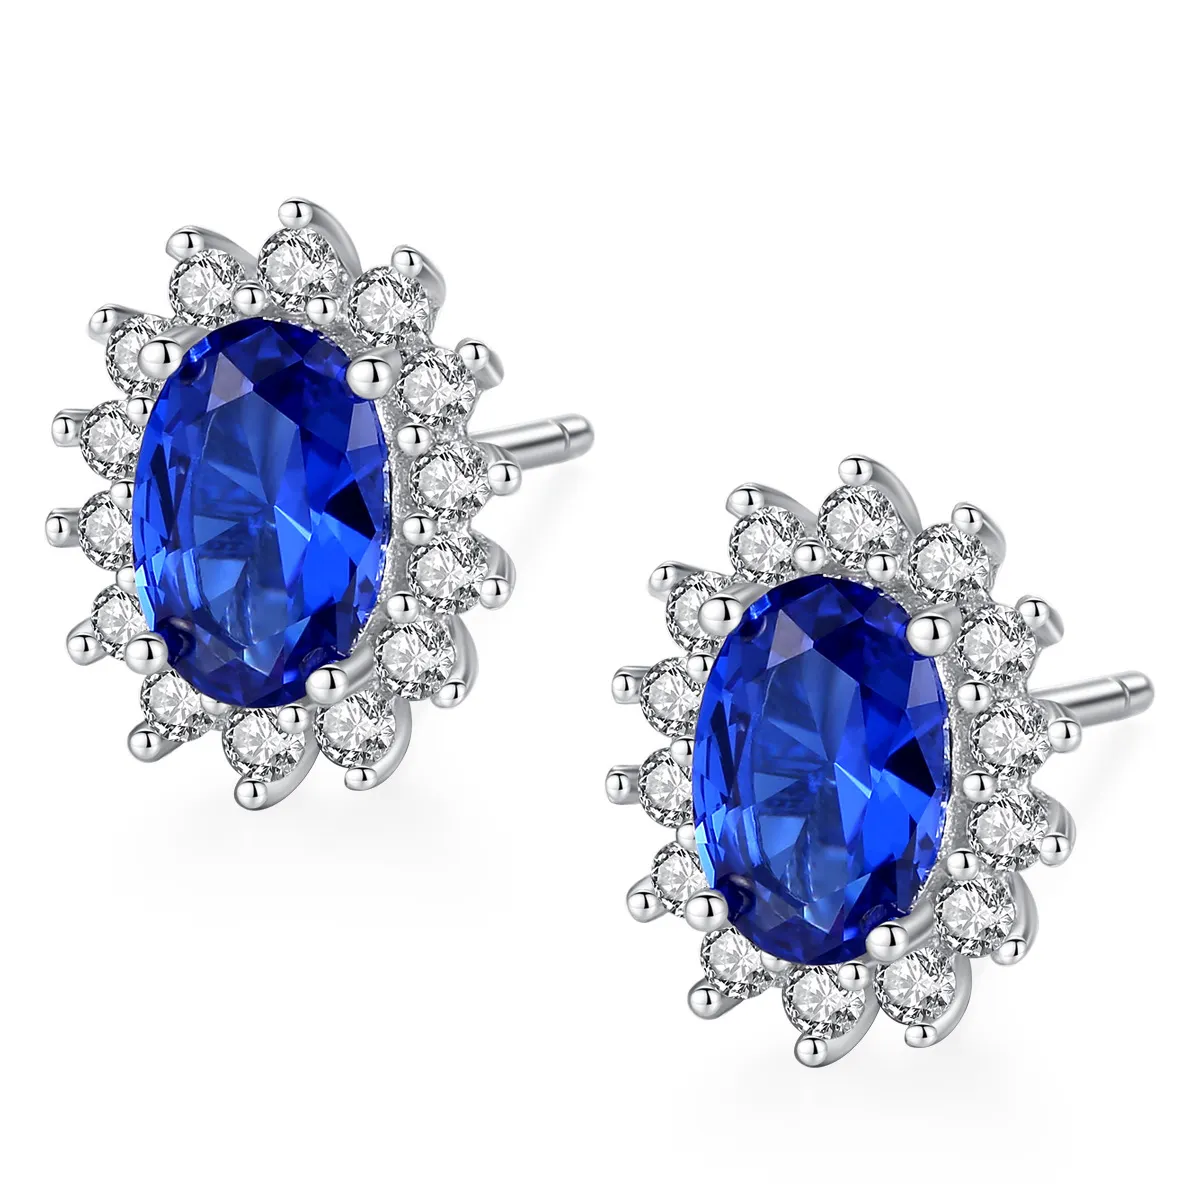 Luxury Jewelry 925 White Gold Plated Sun Flower Blue Gemstone Earring For Women